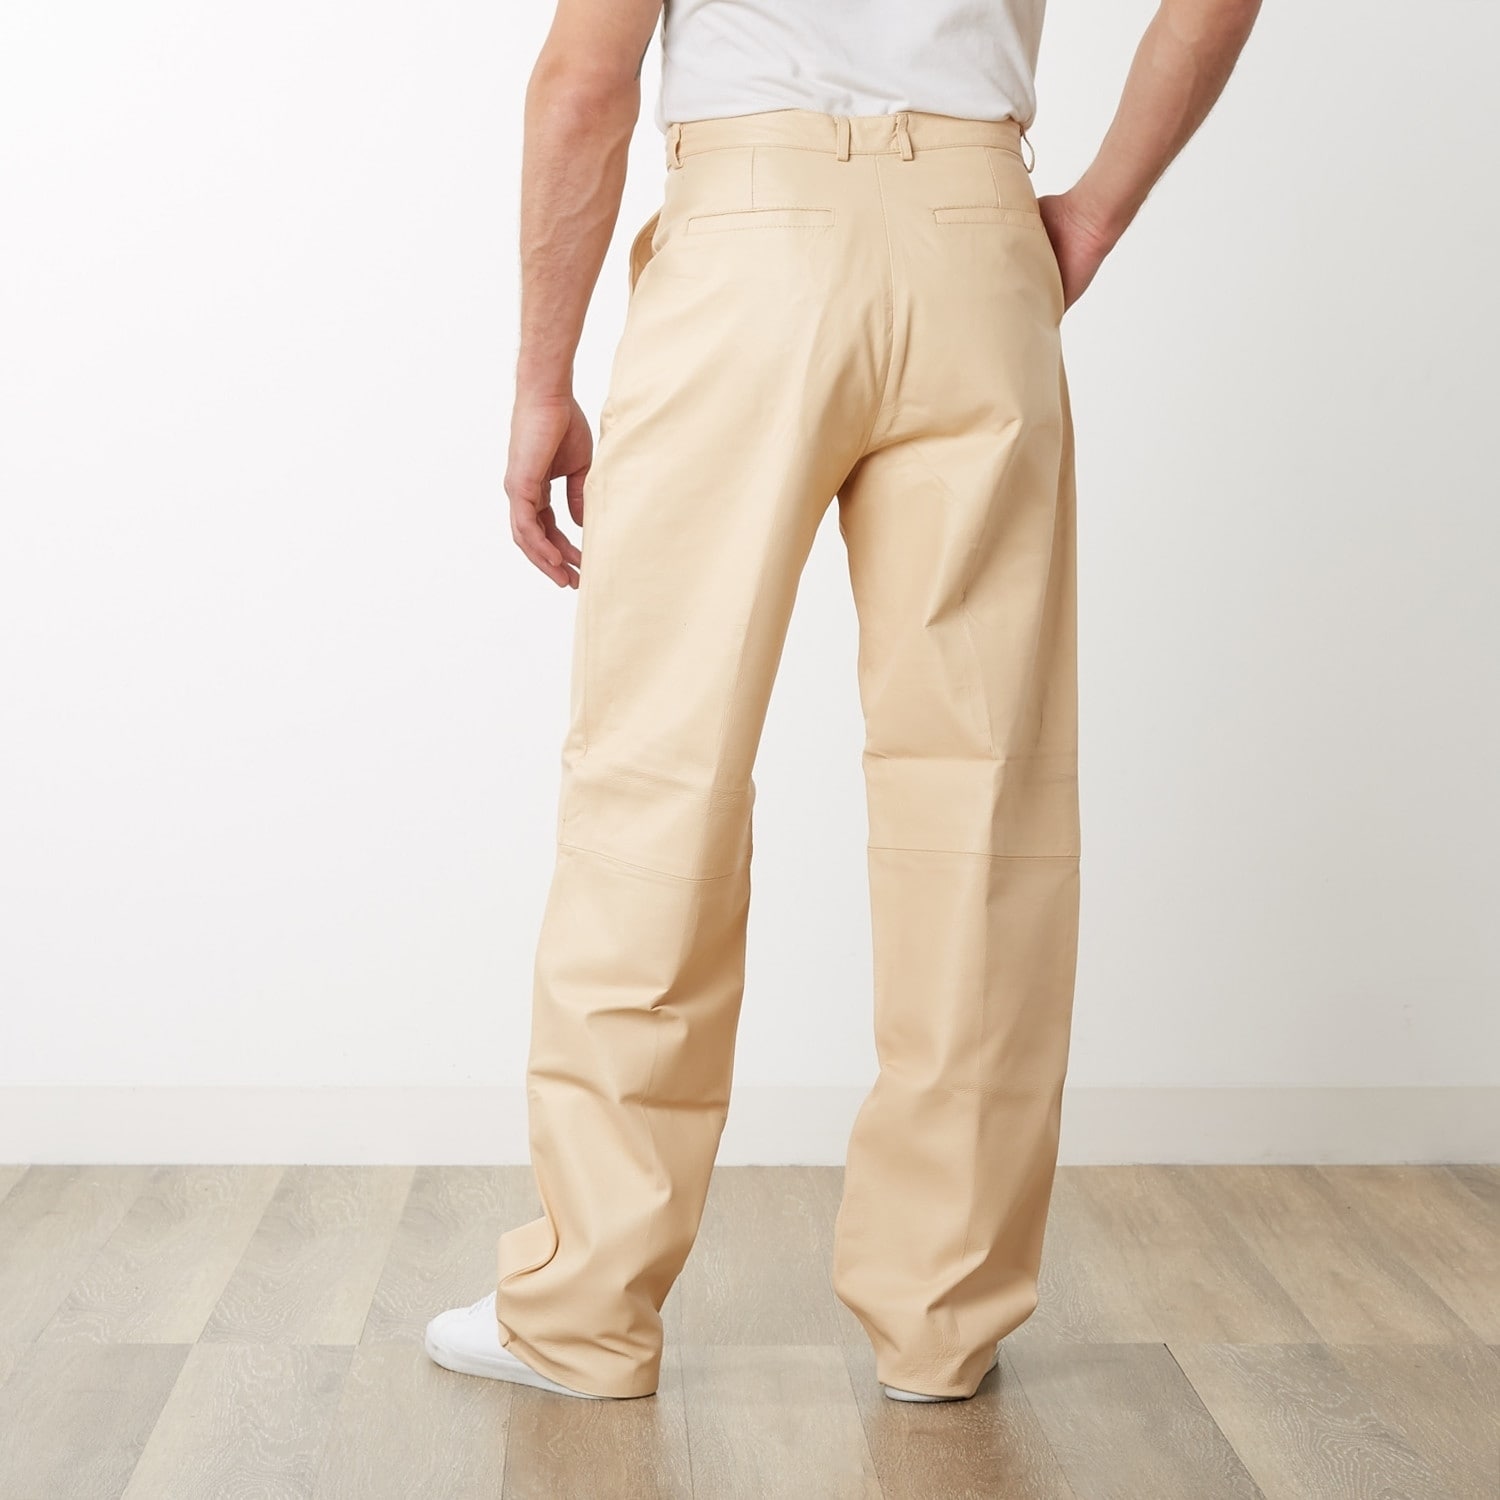 mens leather dress pants